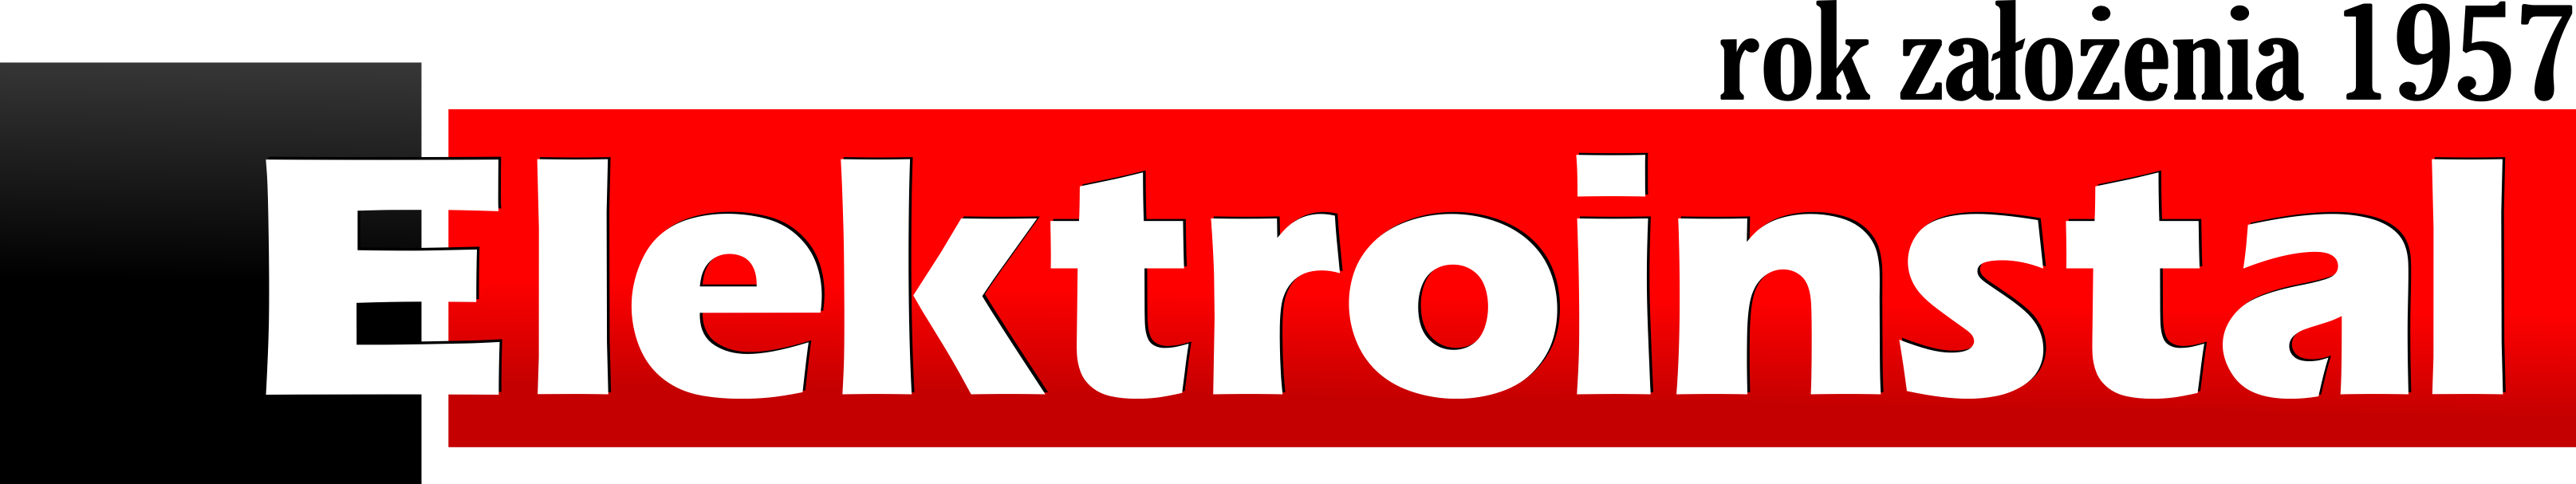 Elektroinstal logo